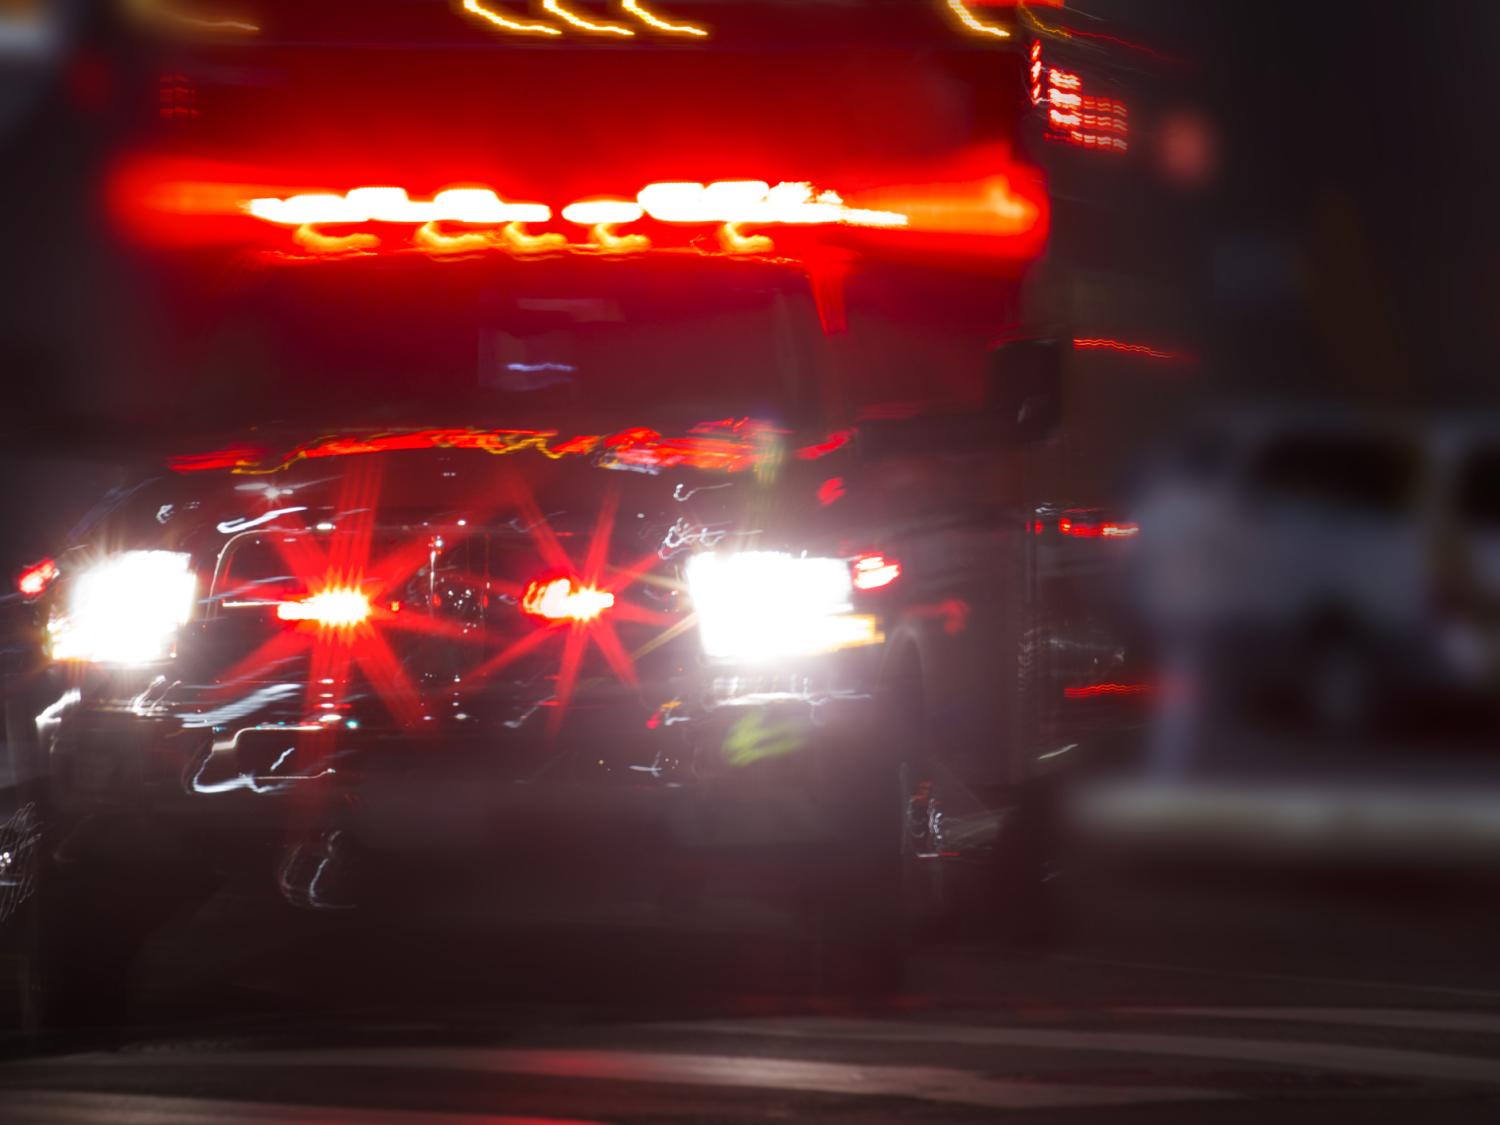 Ambulance at night with lights on